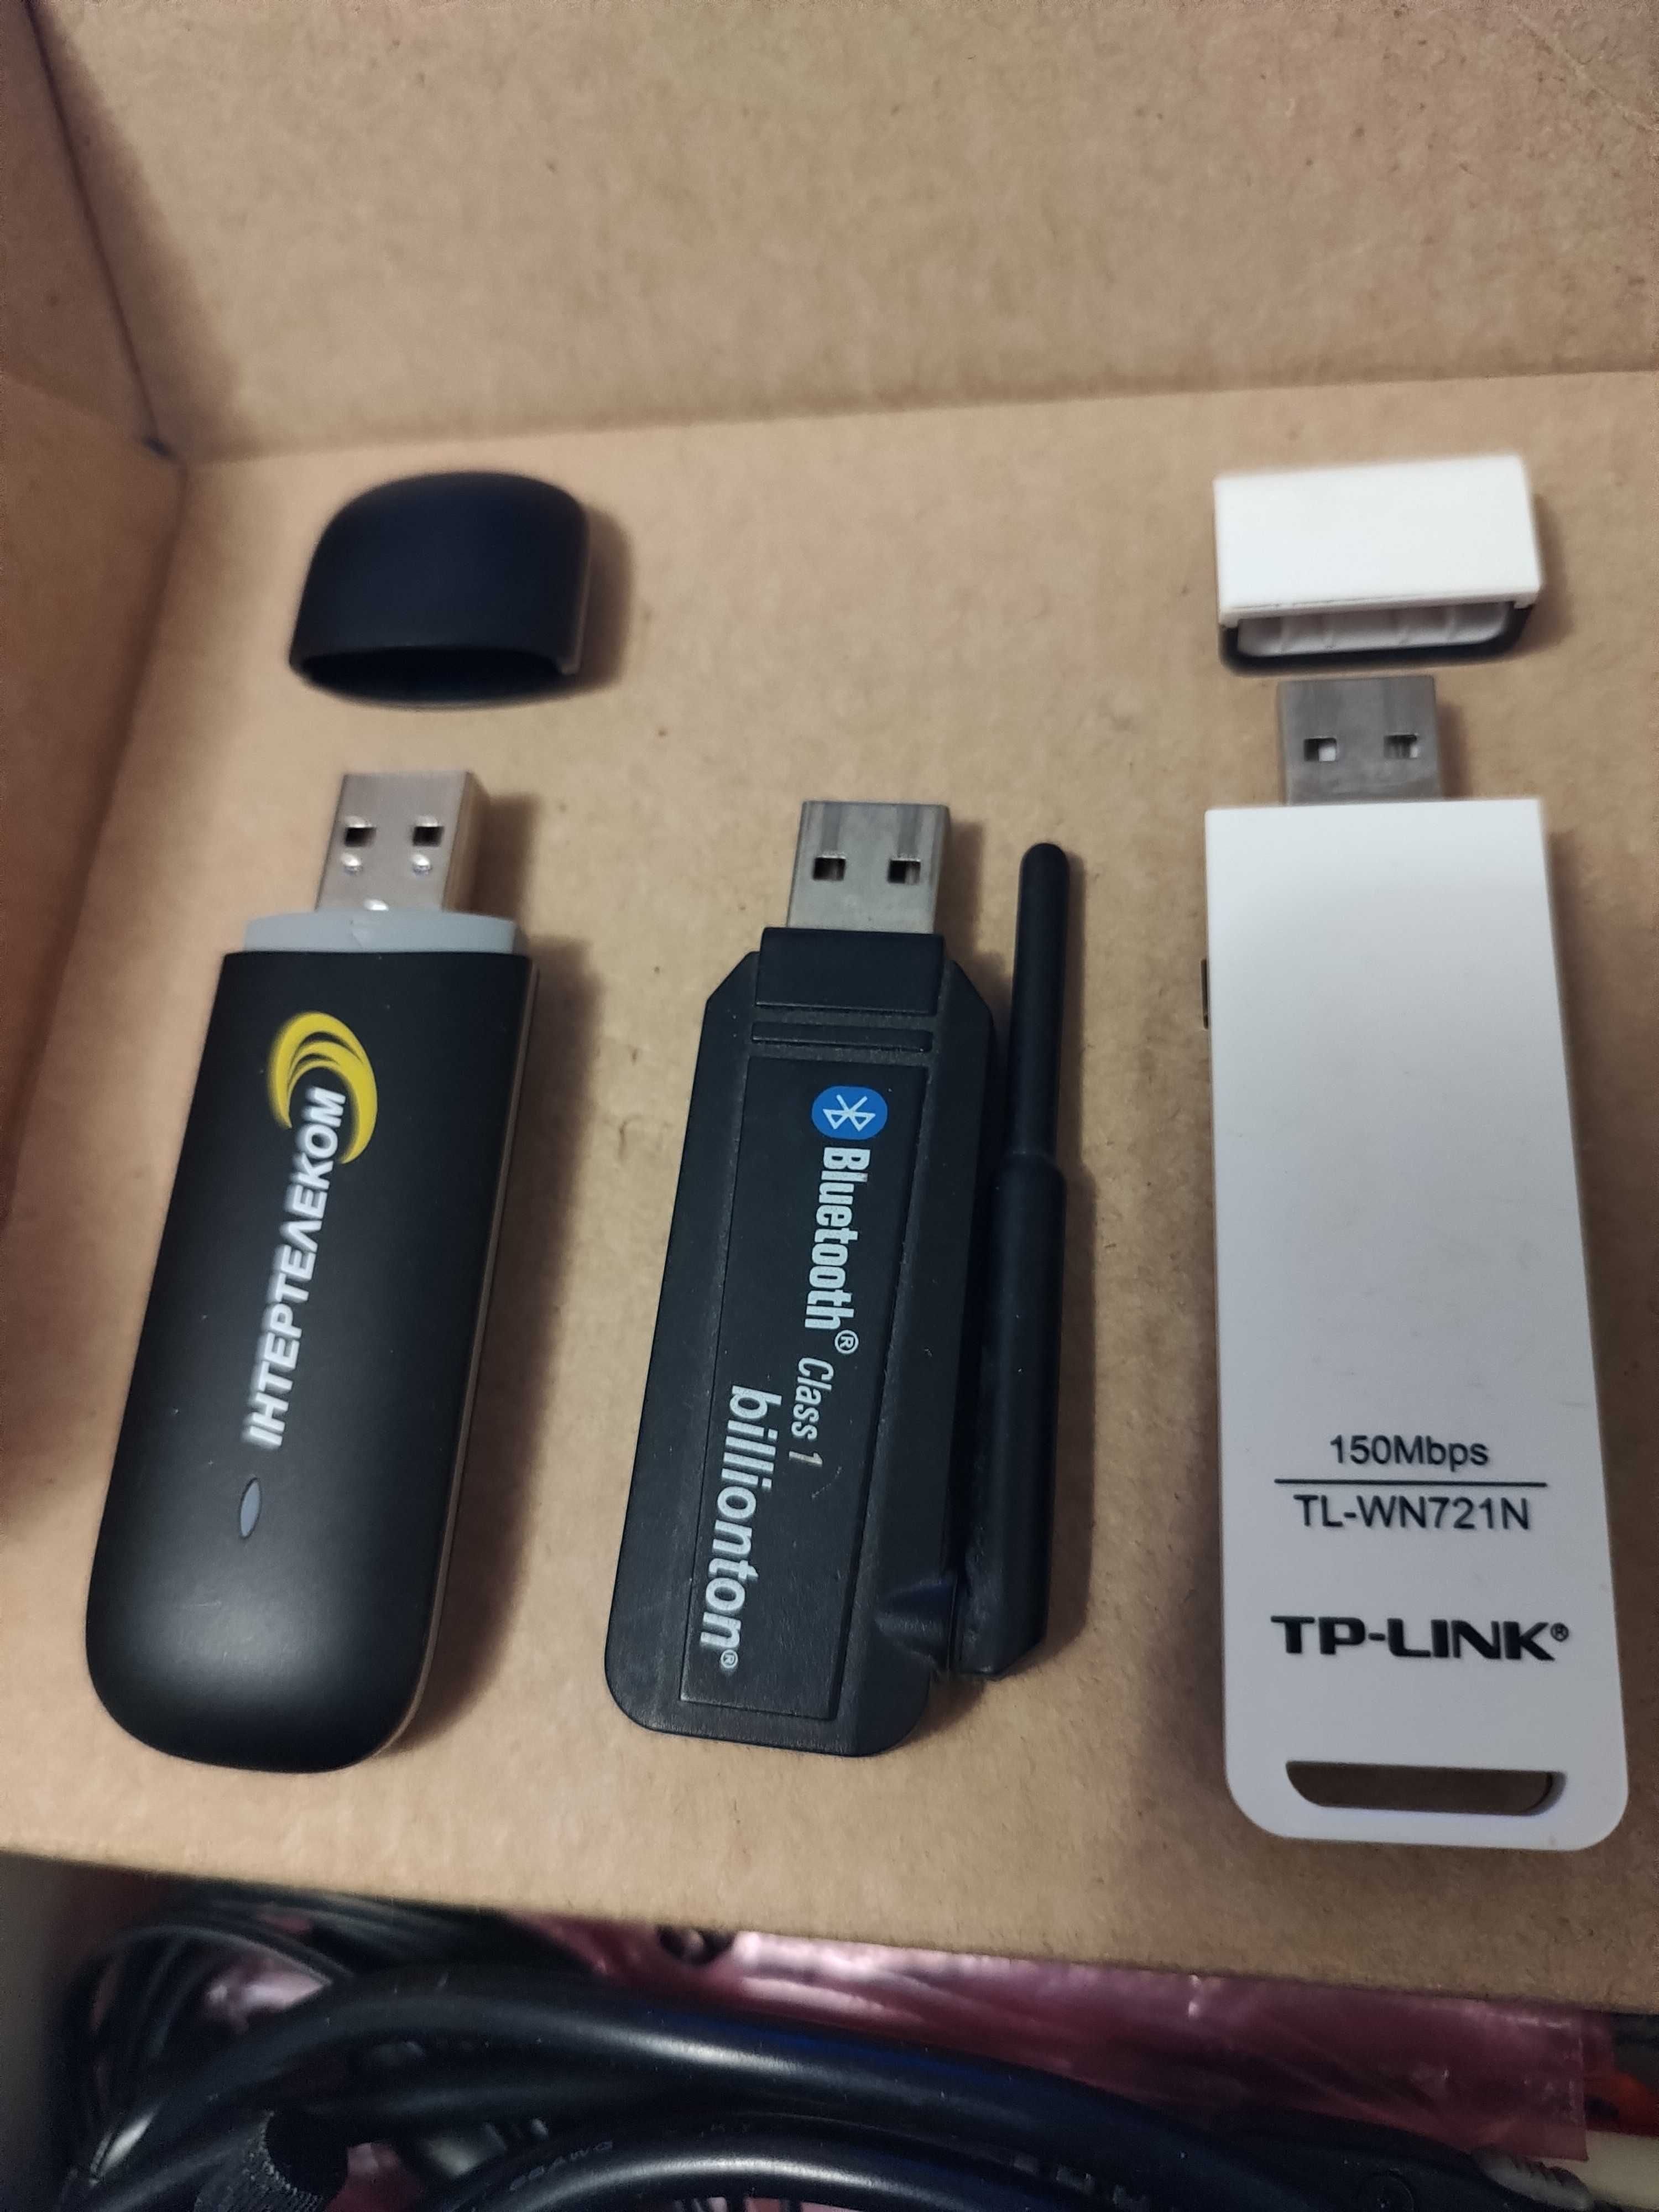 USB модем Huawei 3g, WiFi адаптер TP-LINK, Bluetooth billionton